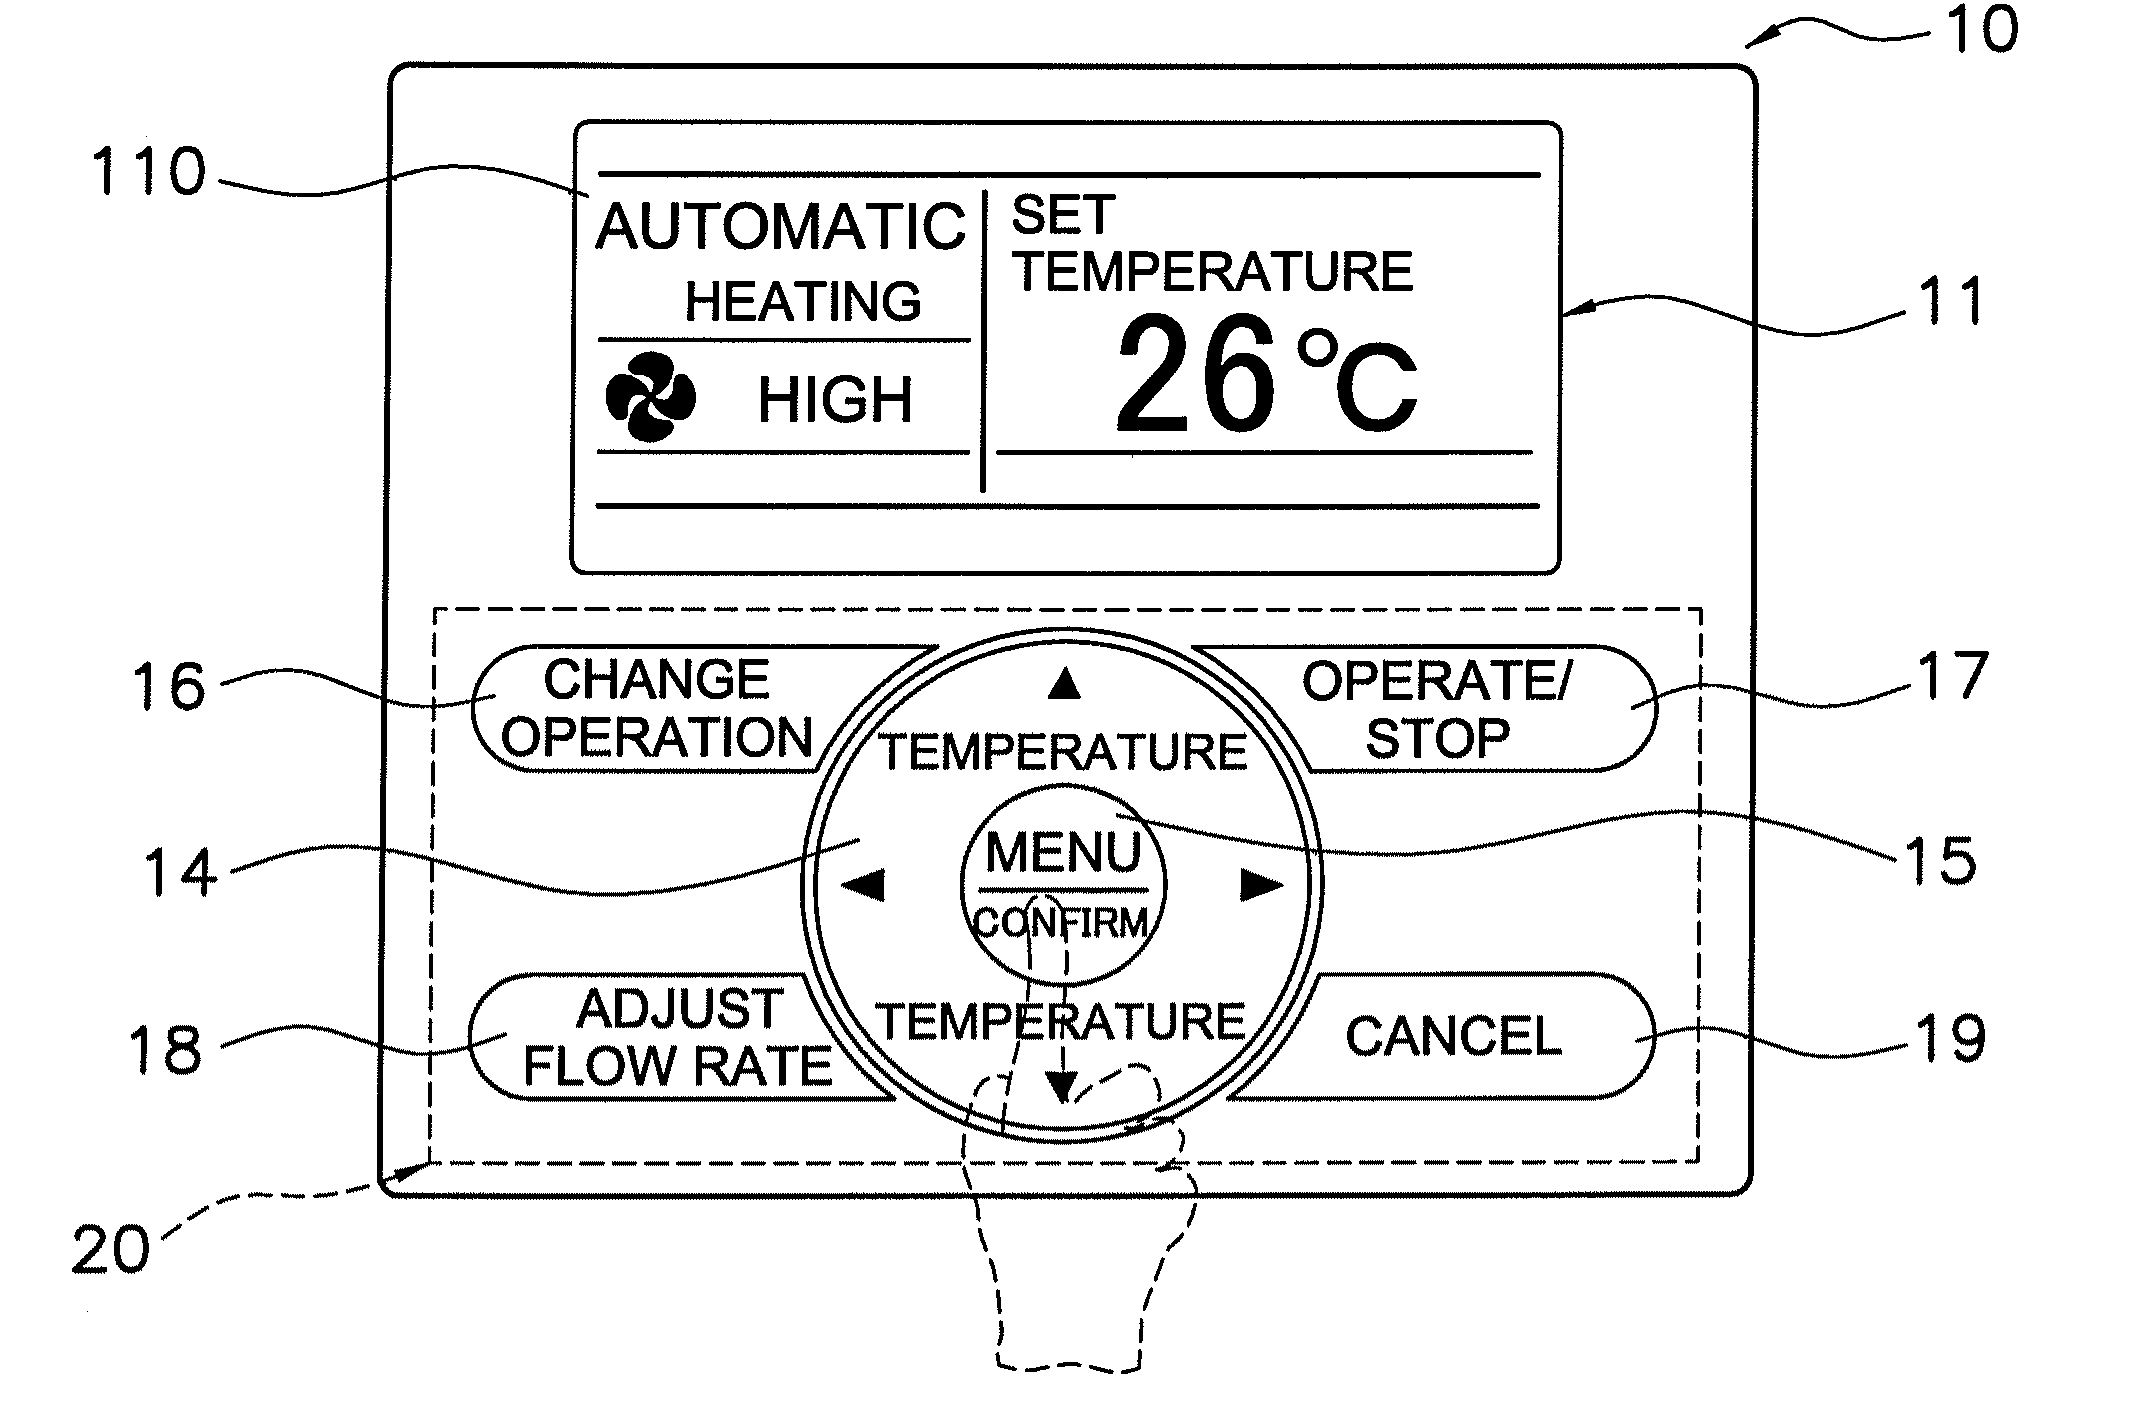 Remote control unit of air conditioning apparatus